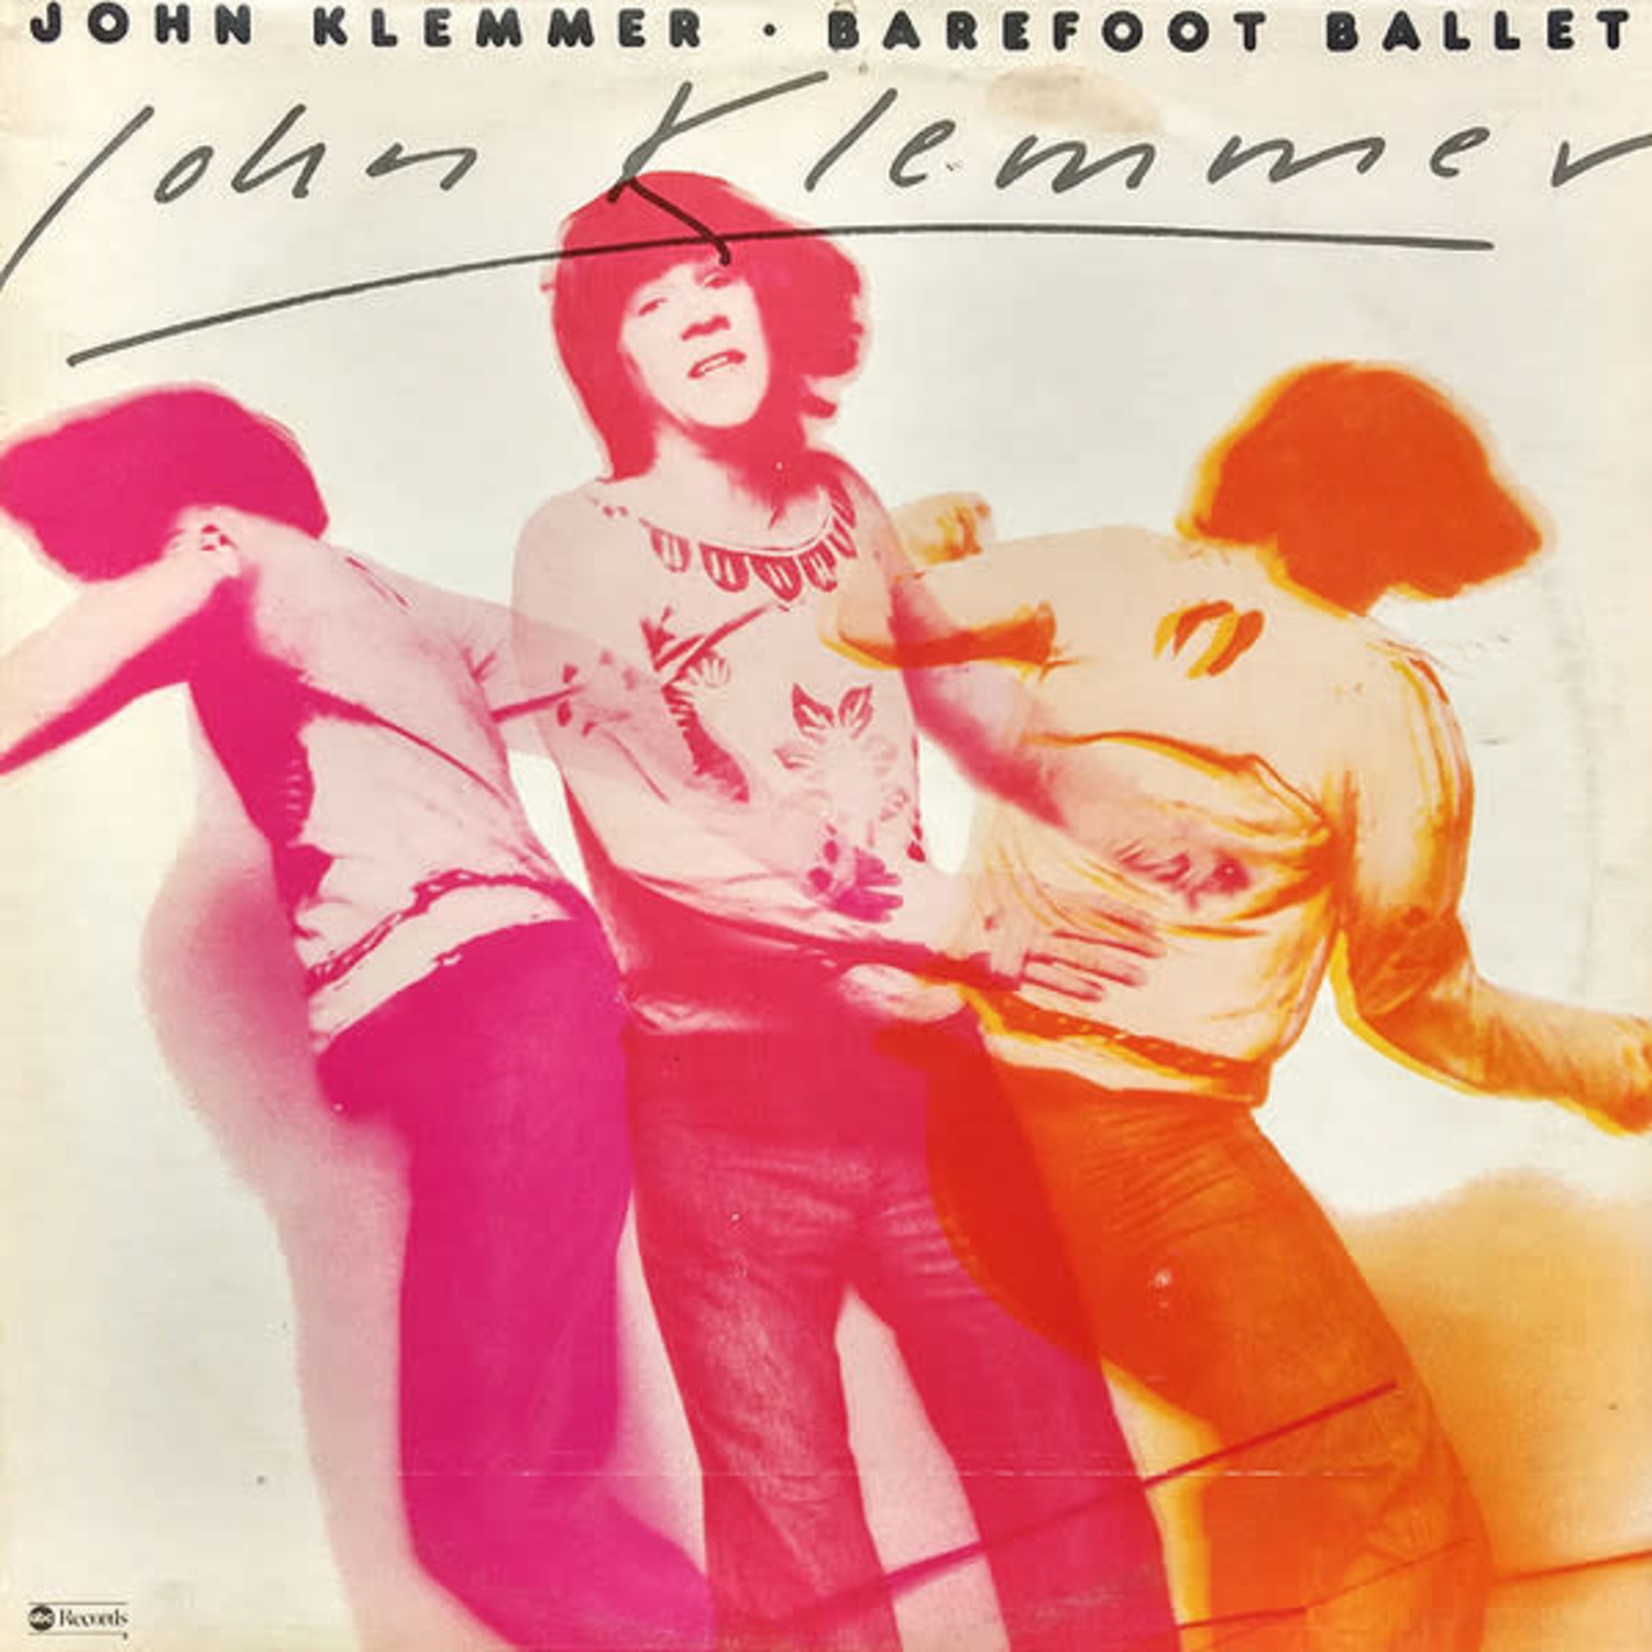 [Vintage] John Klemmer - Barefoot Ballet